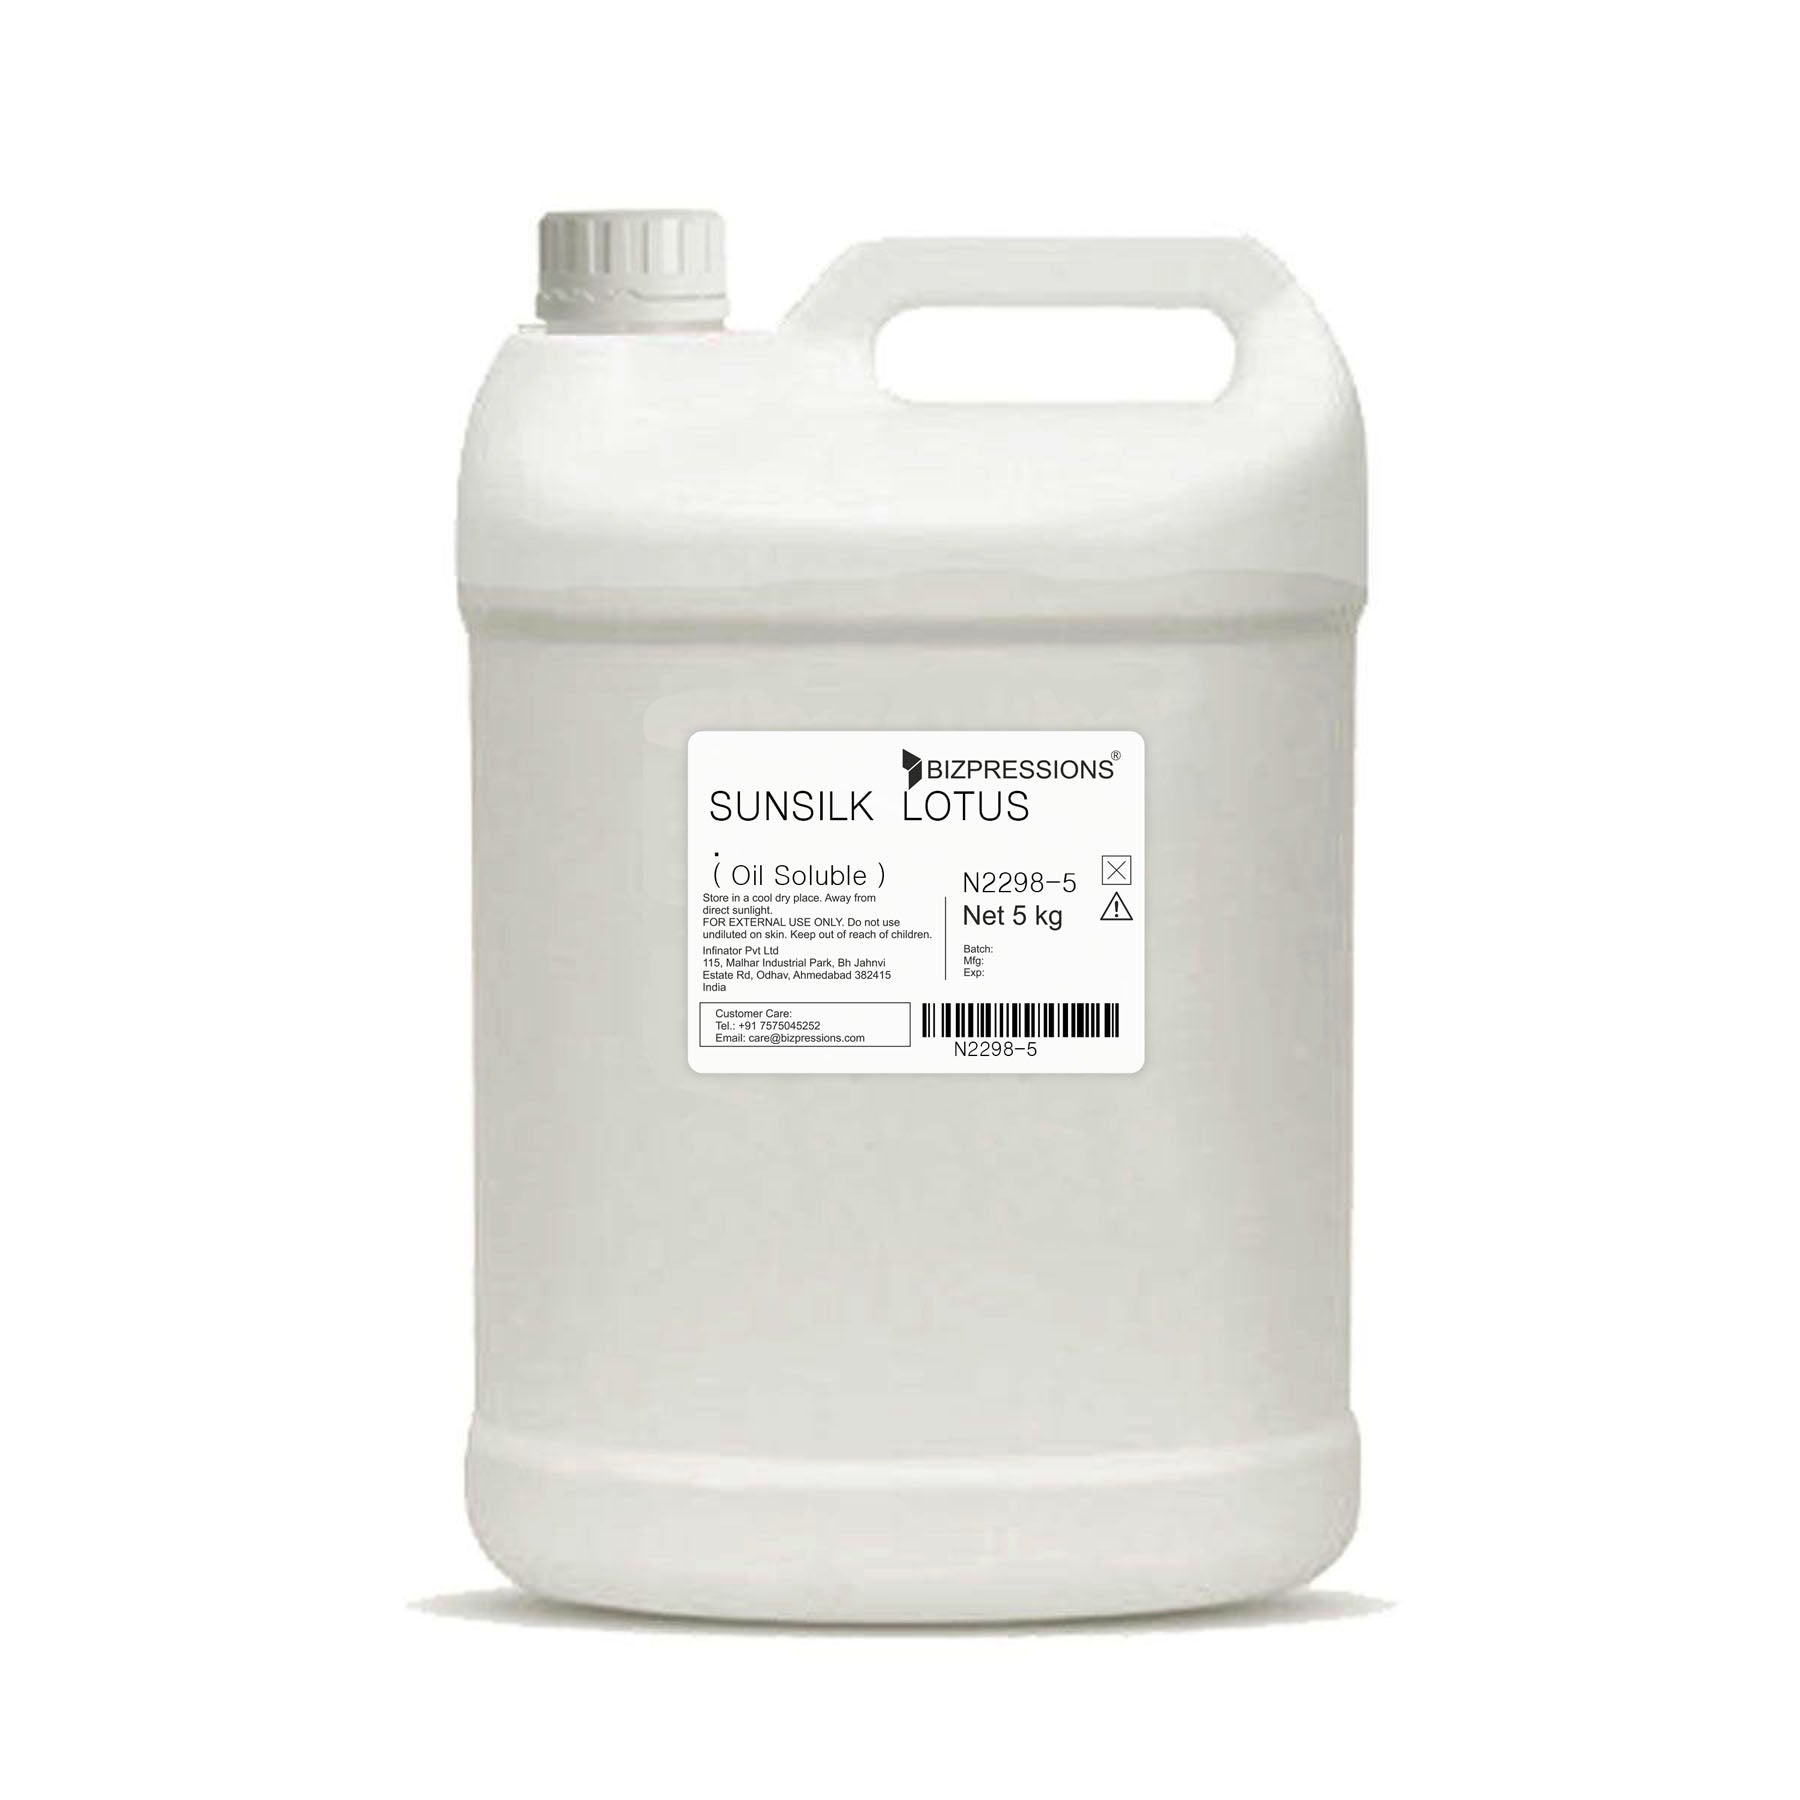 SUNSILK LOTUS - Fragrance ( Oil Soluble ) - 5 kg